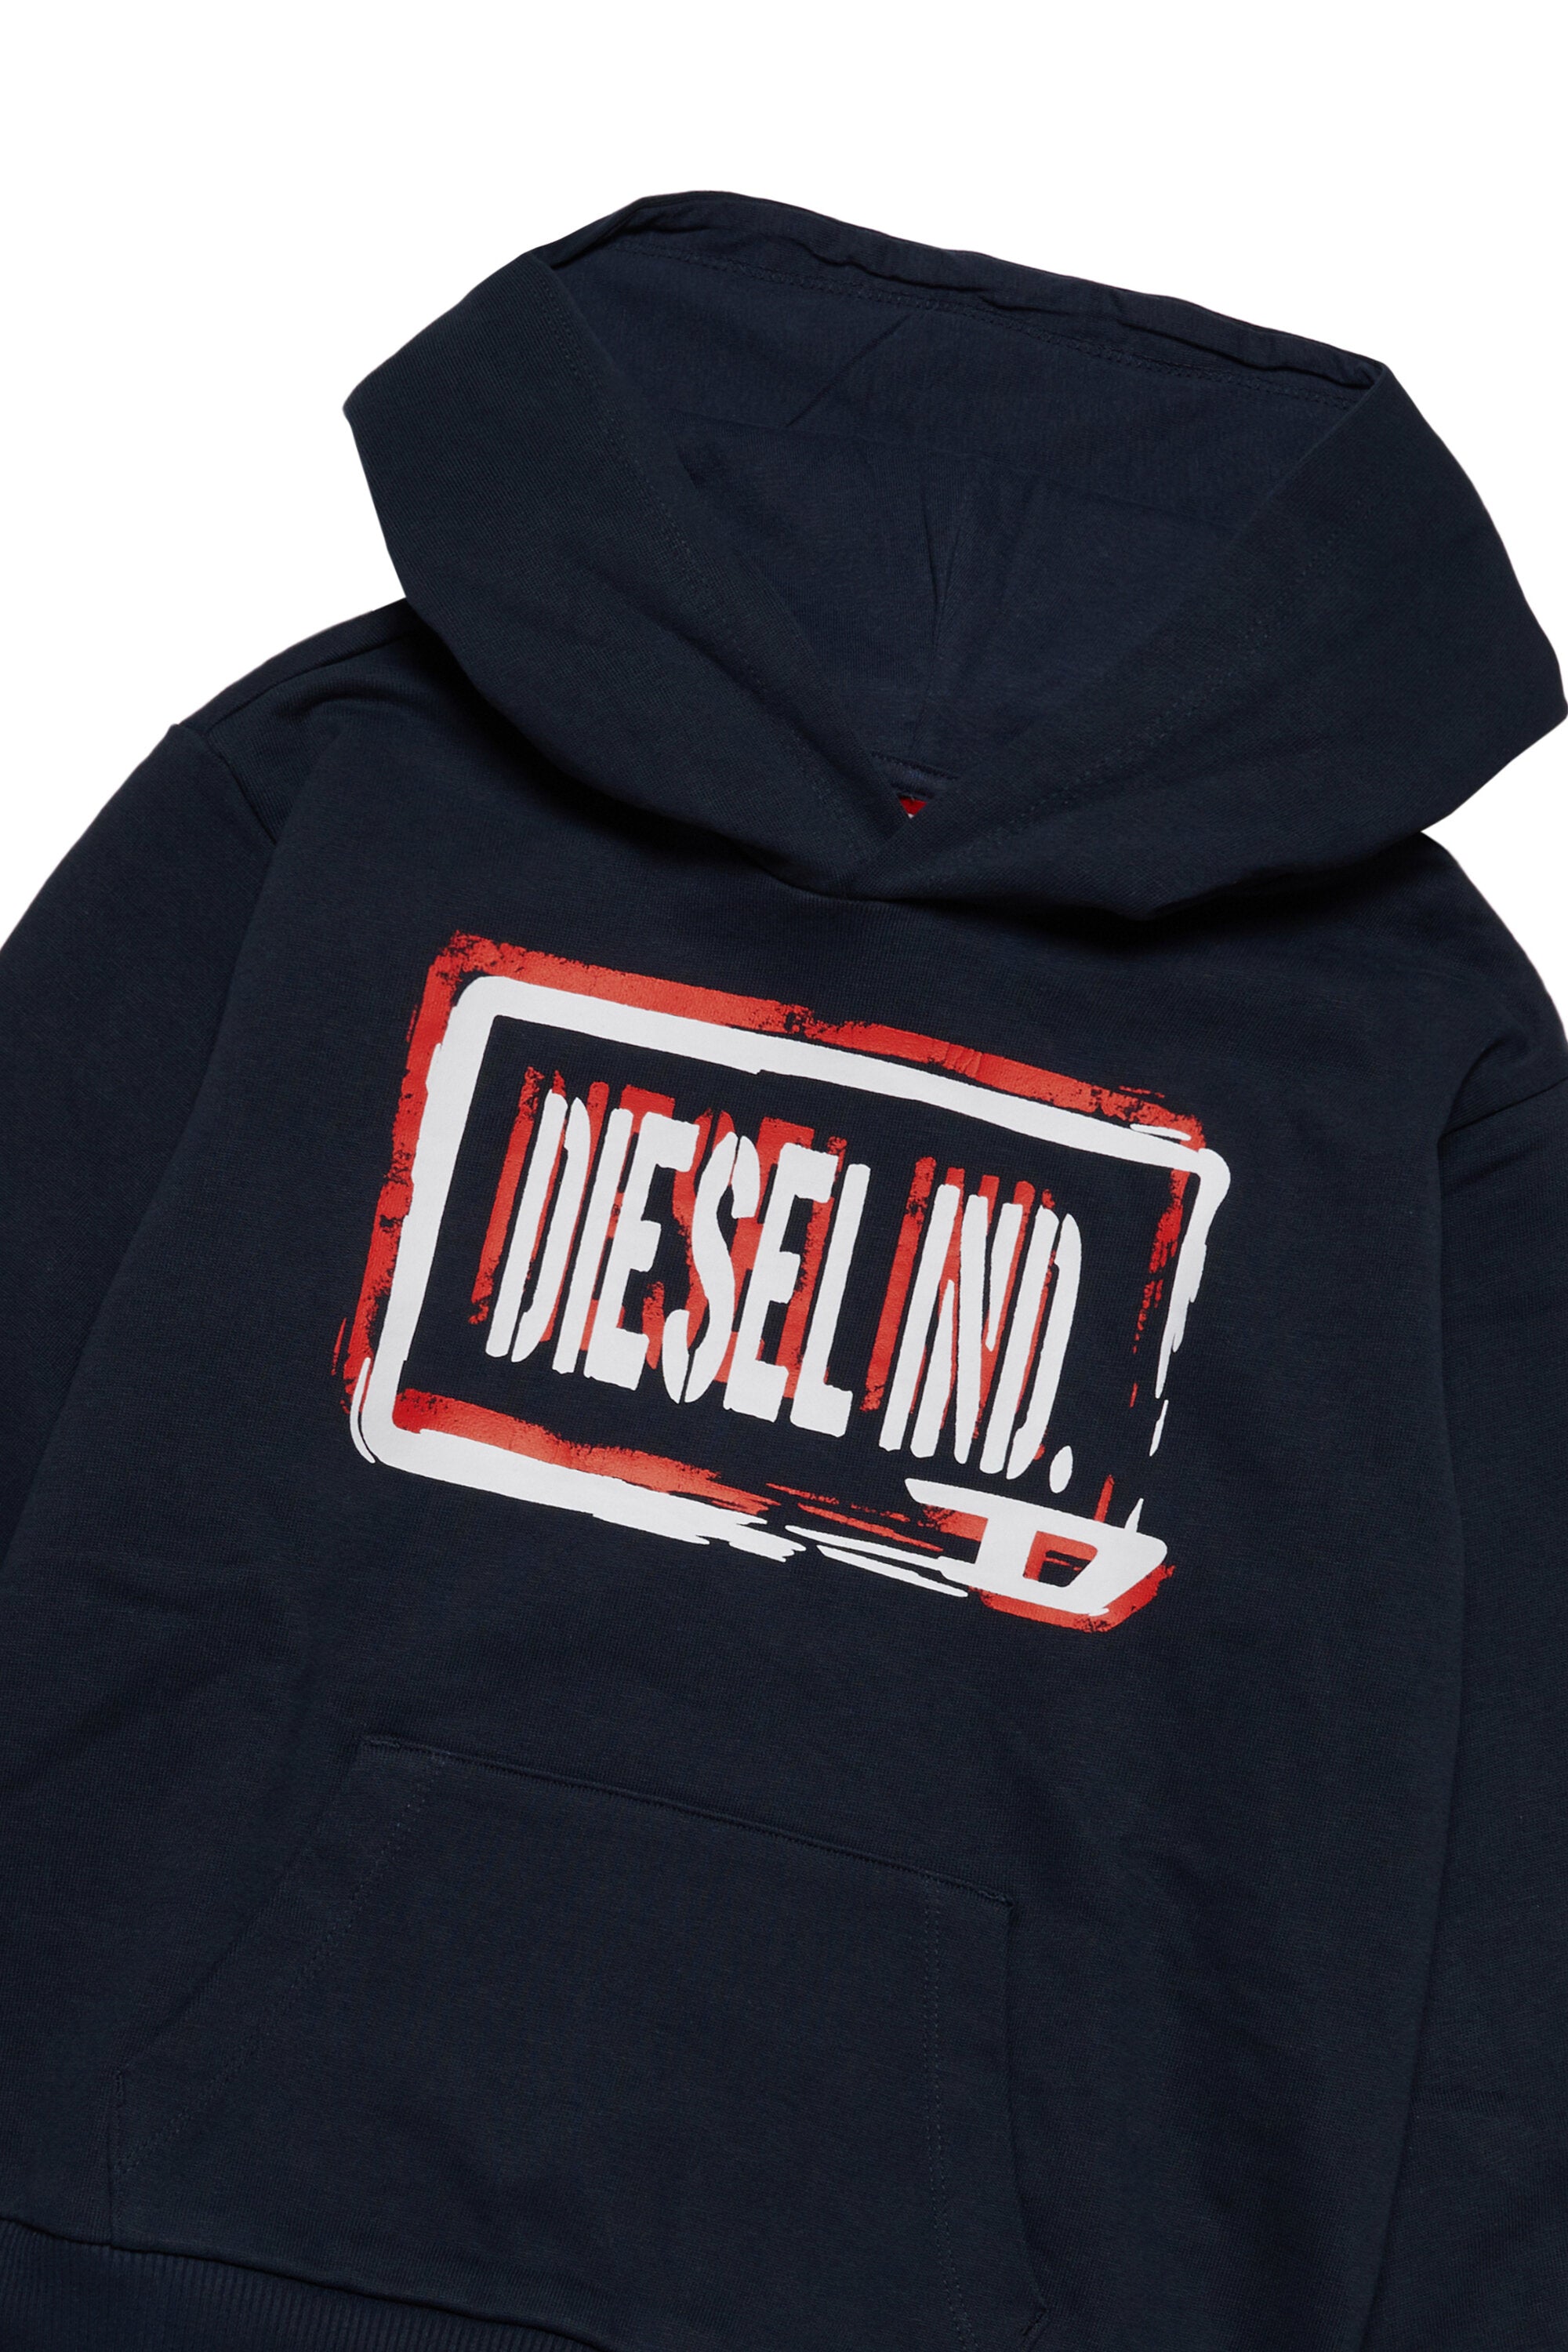 Diesel Ind.グラフィック入りボーイズフード付きスウェットシャツ